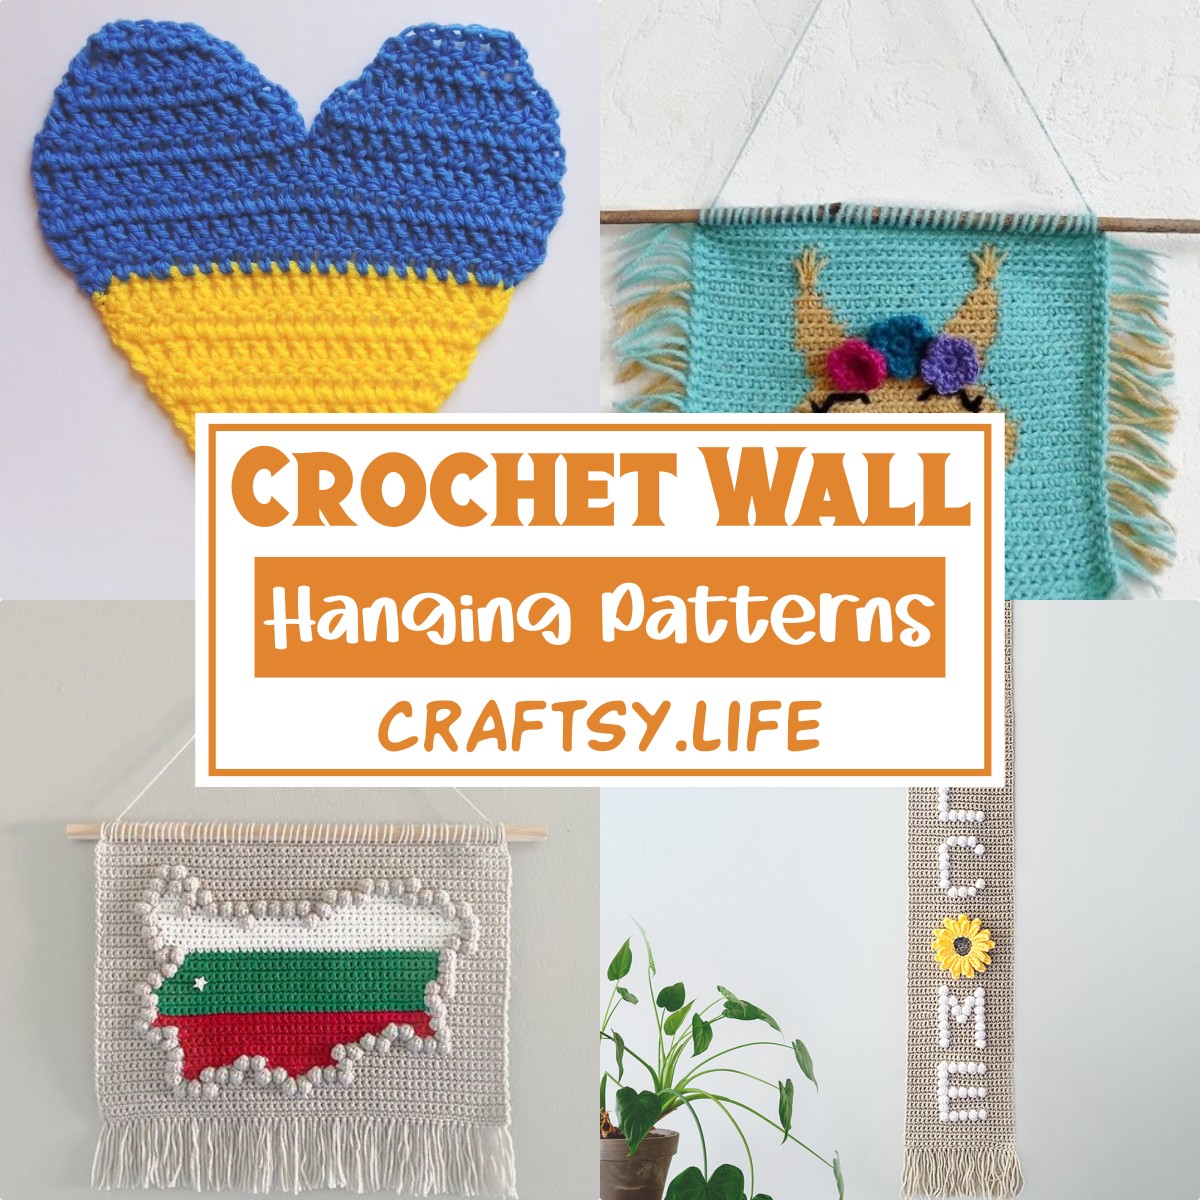 3 Free Crochet Wall Hanging Patterns